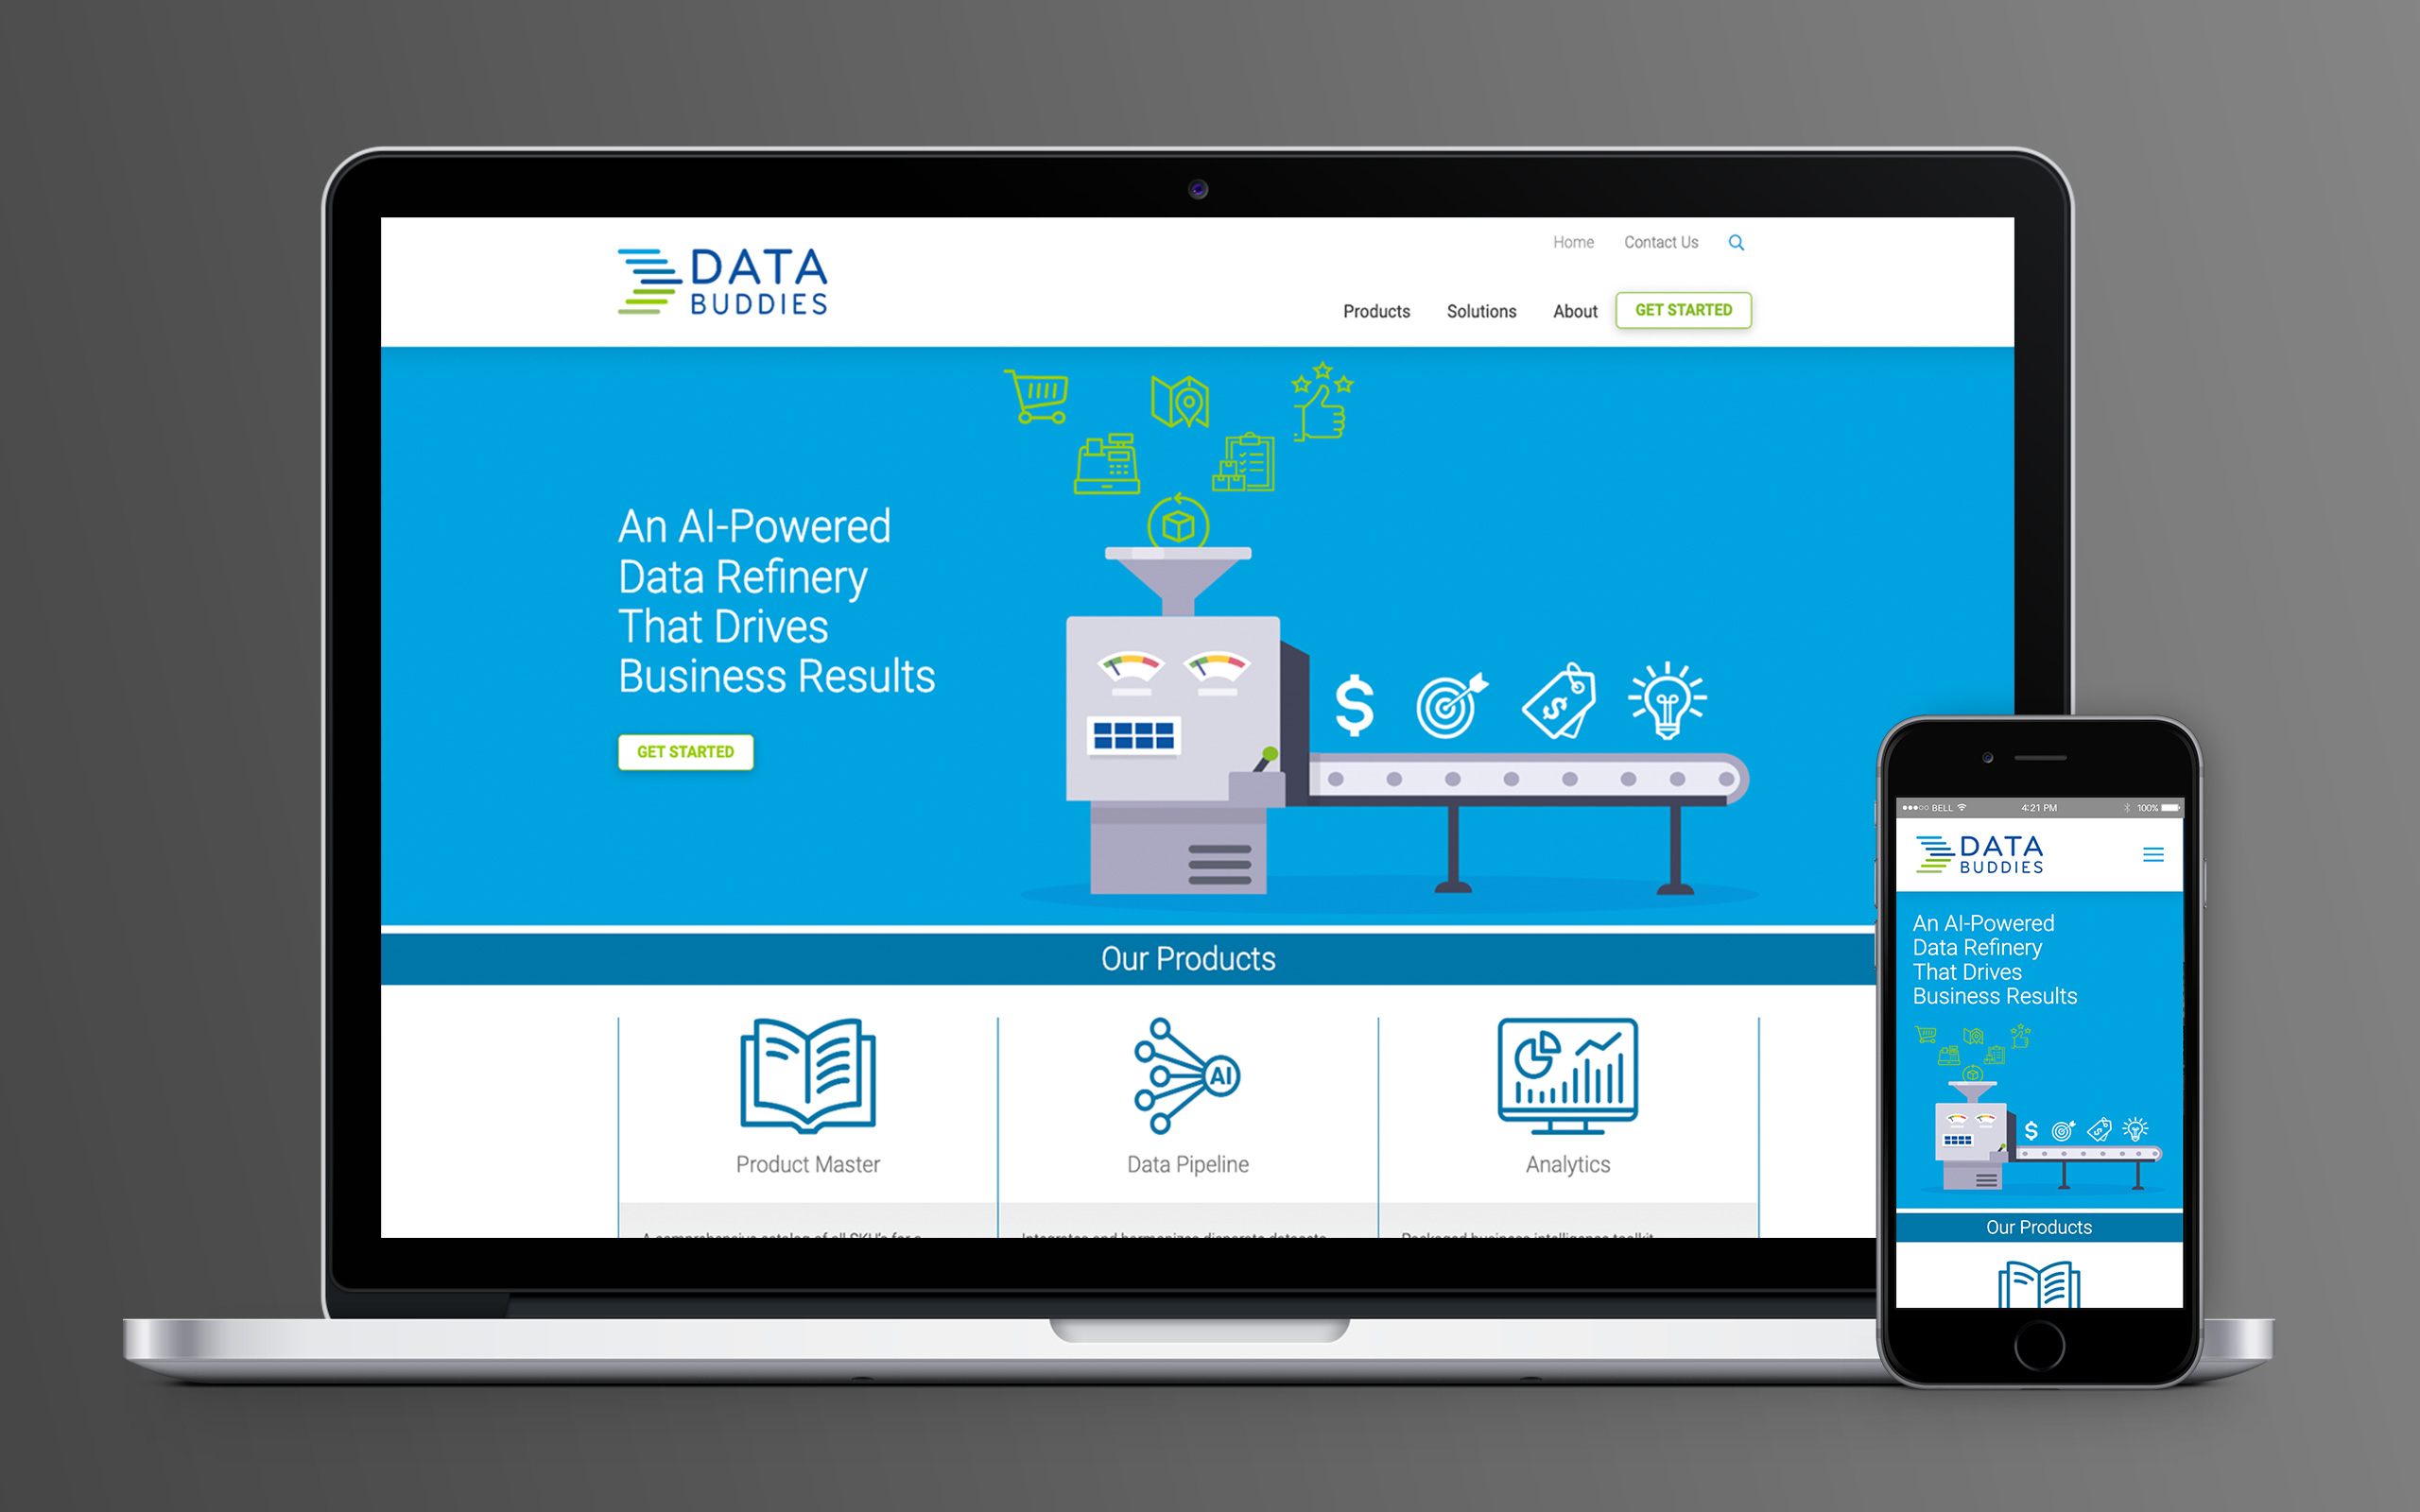 Data Buddies Website Home Page